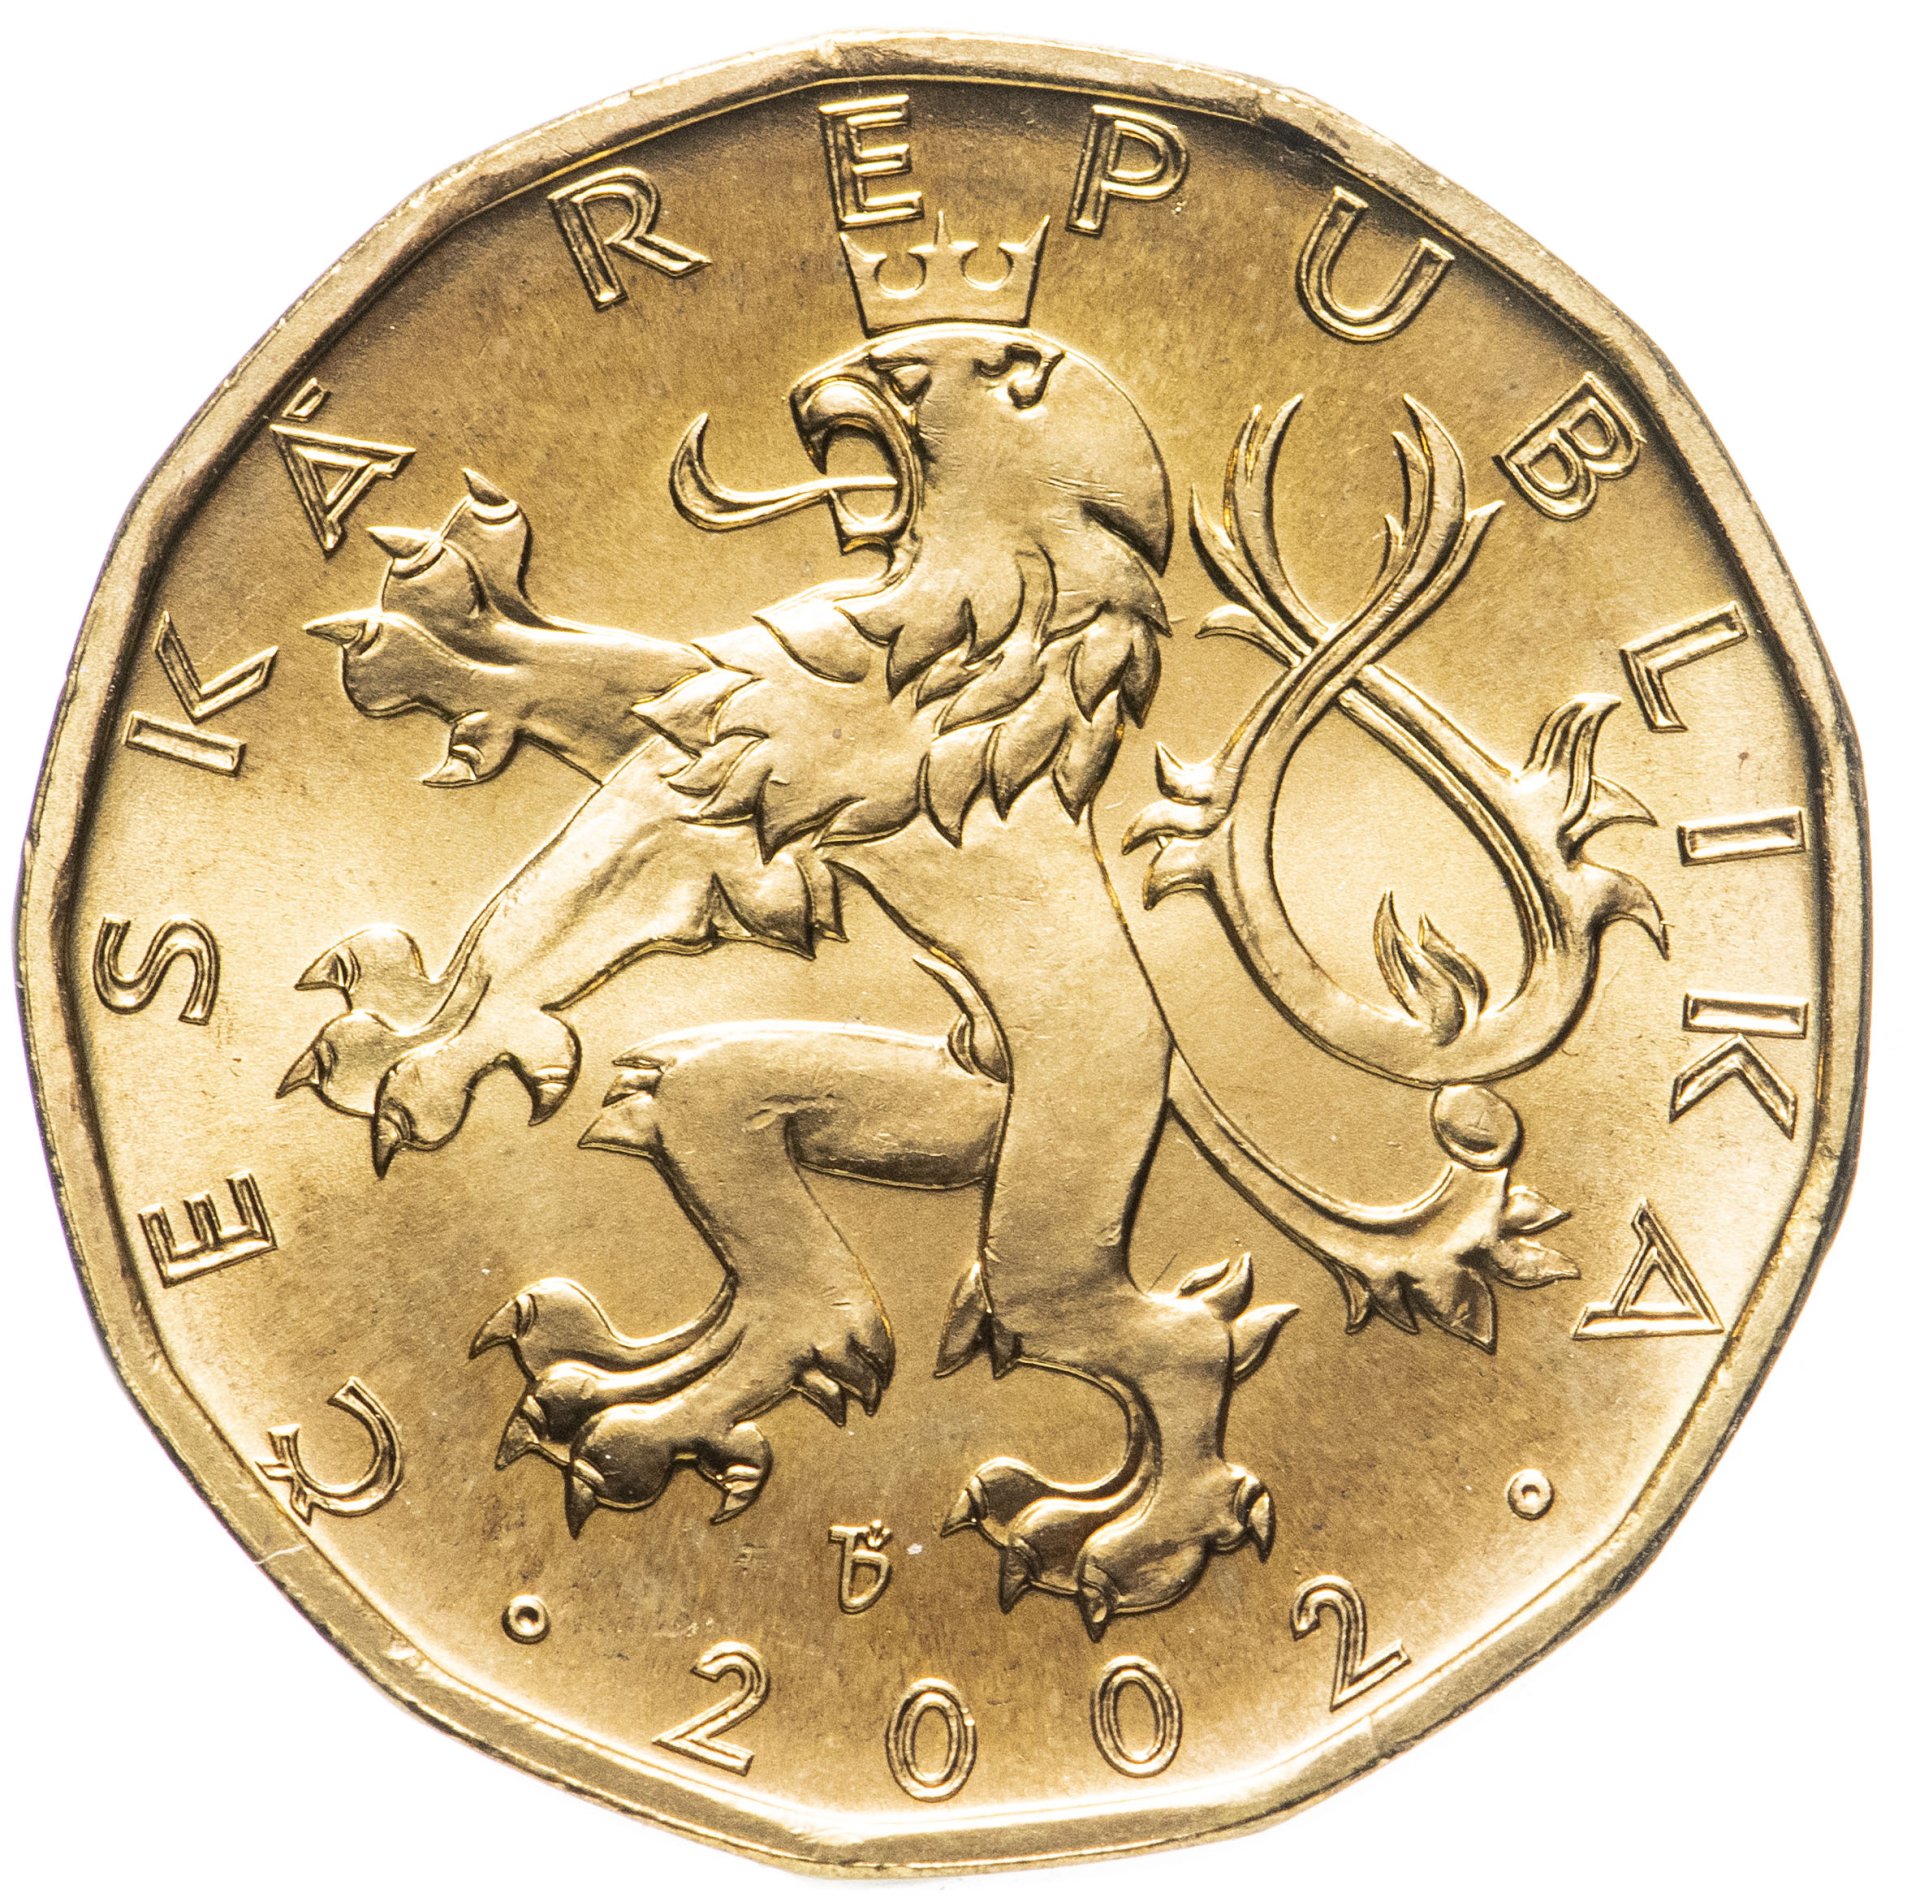 20 кронов в рублях. Монета 1 крон 2002 года. Чешская монета князя Вацлава. Чешская крона монета. Чешские кроны монеты.